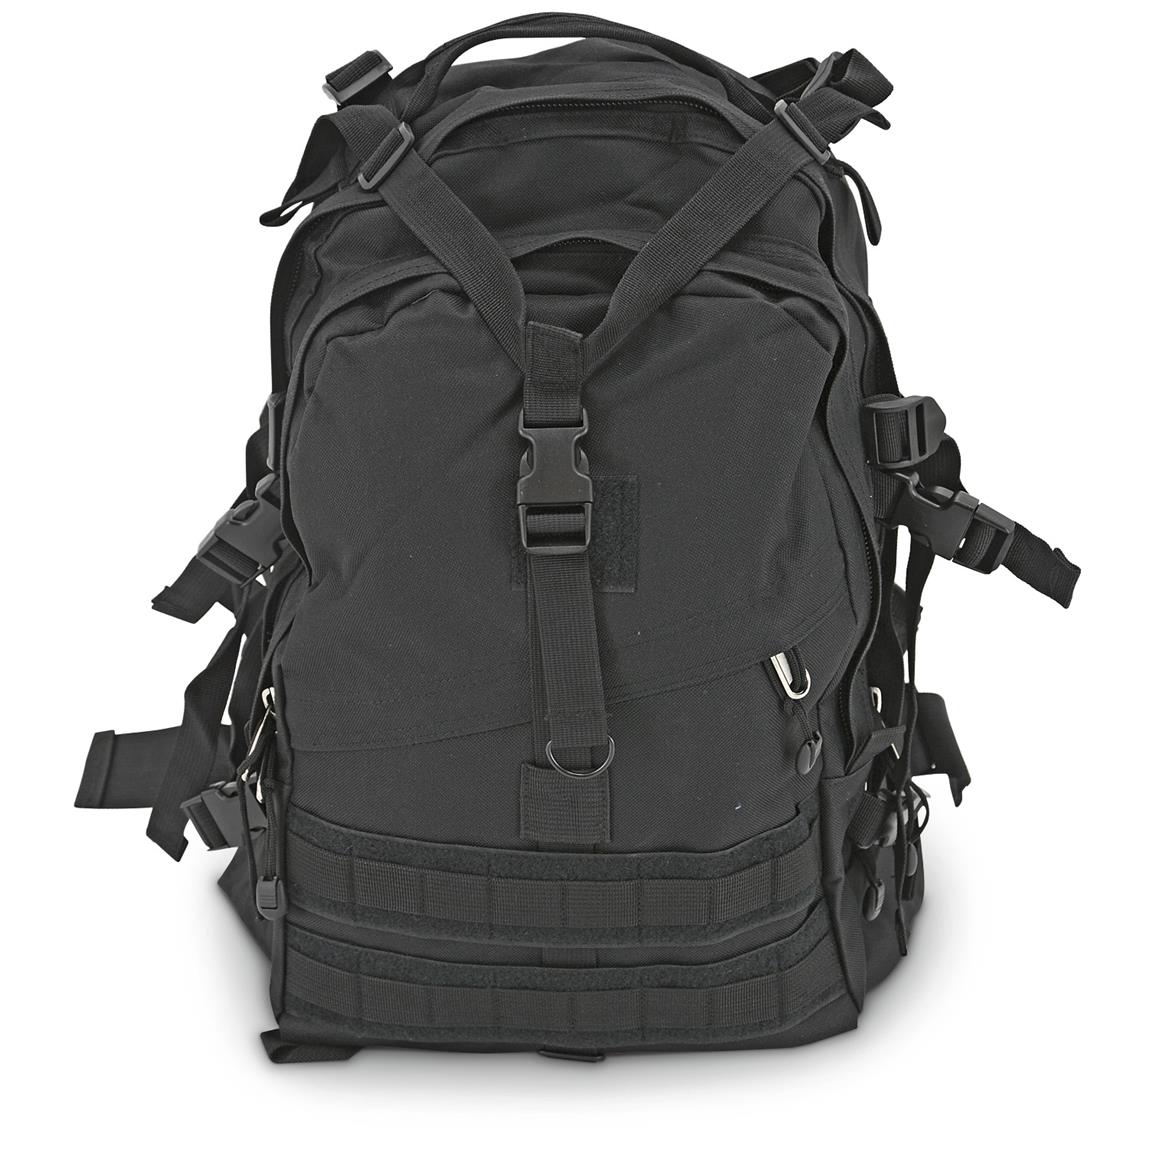 Heavy Duty Backpack | sportsmansguide.com | Sportsman's Guide